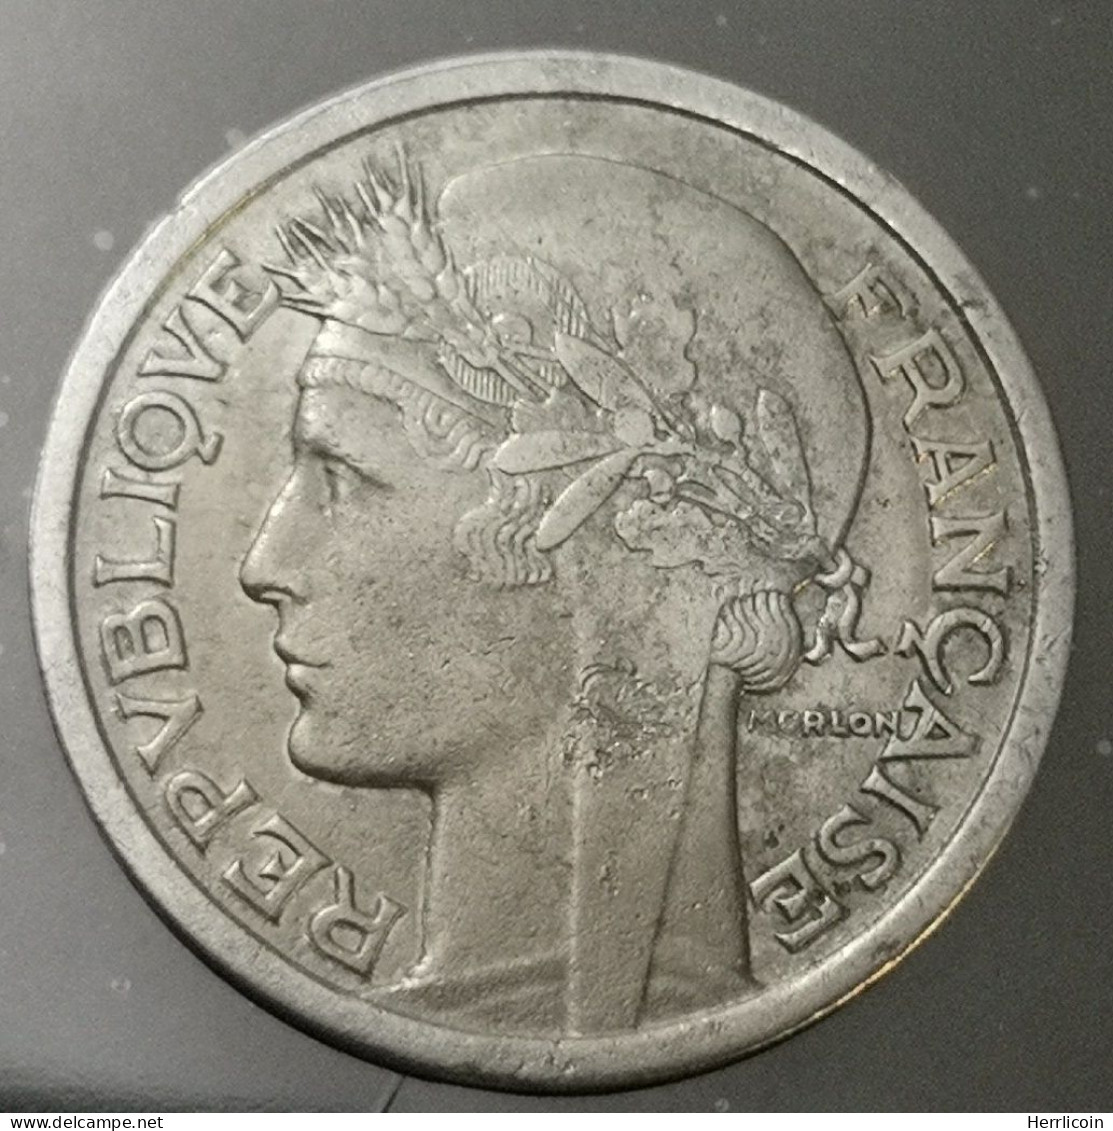 Monnaie France - 1957 B - 1 Franc Morlon Aluminium, Légère - 1 Franc